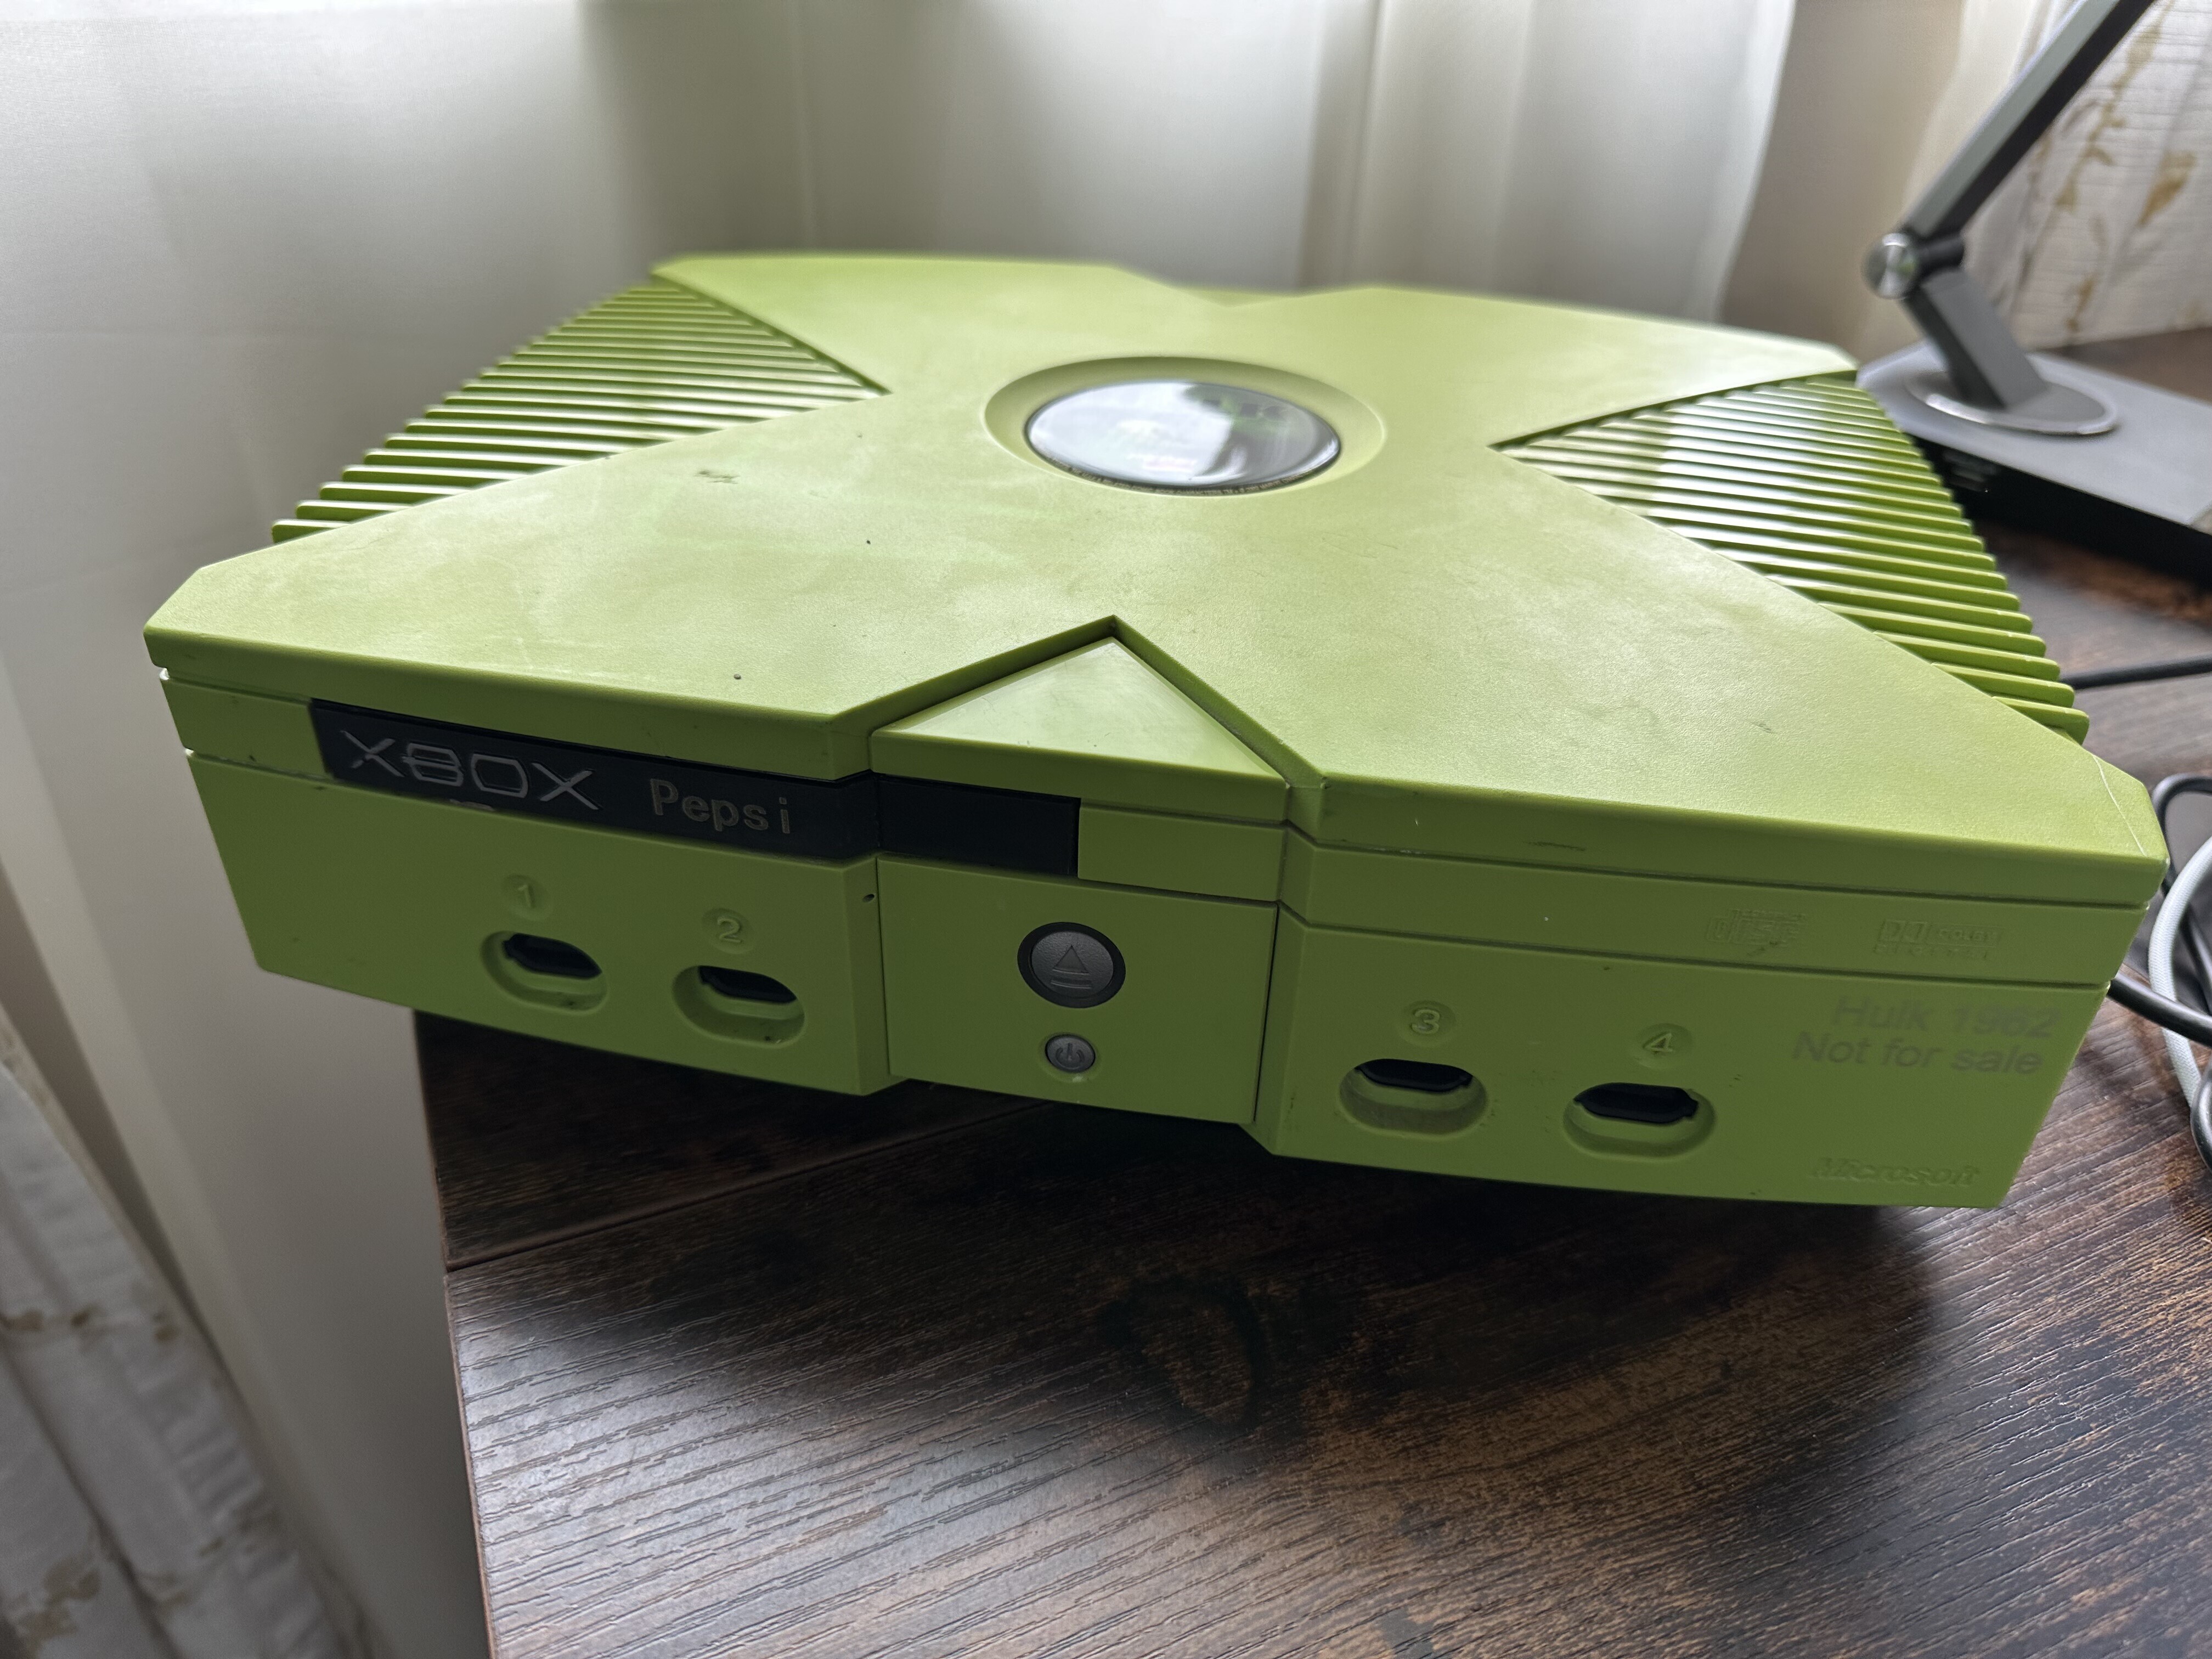  Microsoft Xbox Microsoft Xbox Pepsi Hulk Console Prototype